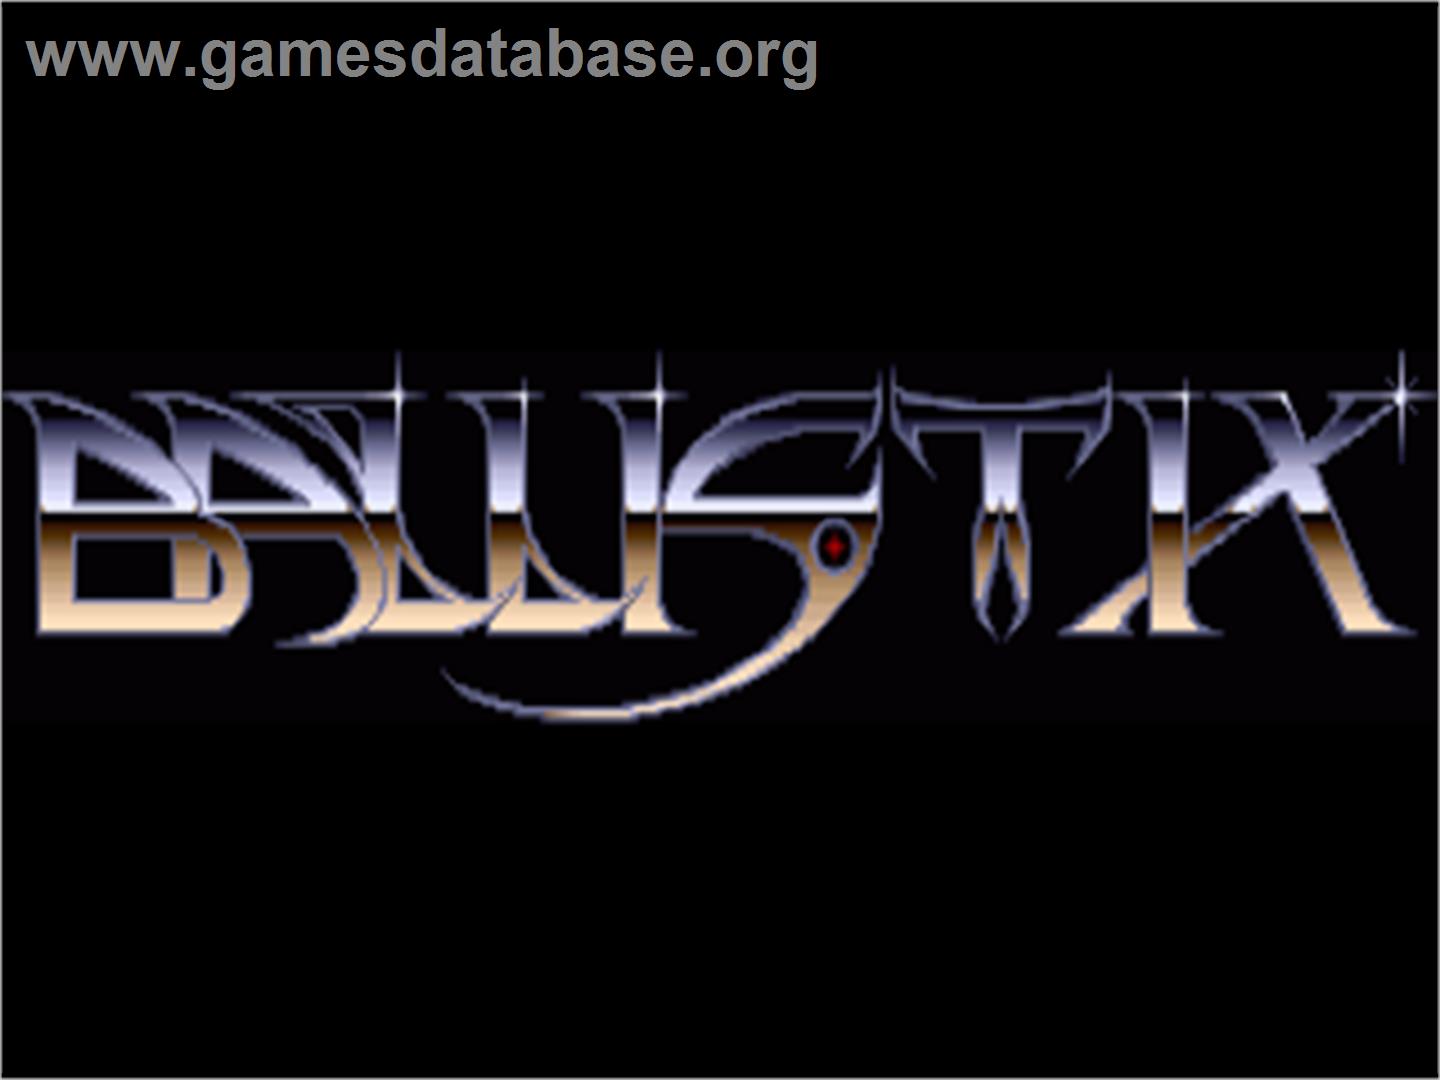 Ballistix - Commodore Amiga - Artwork - Title Screen